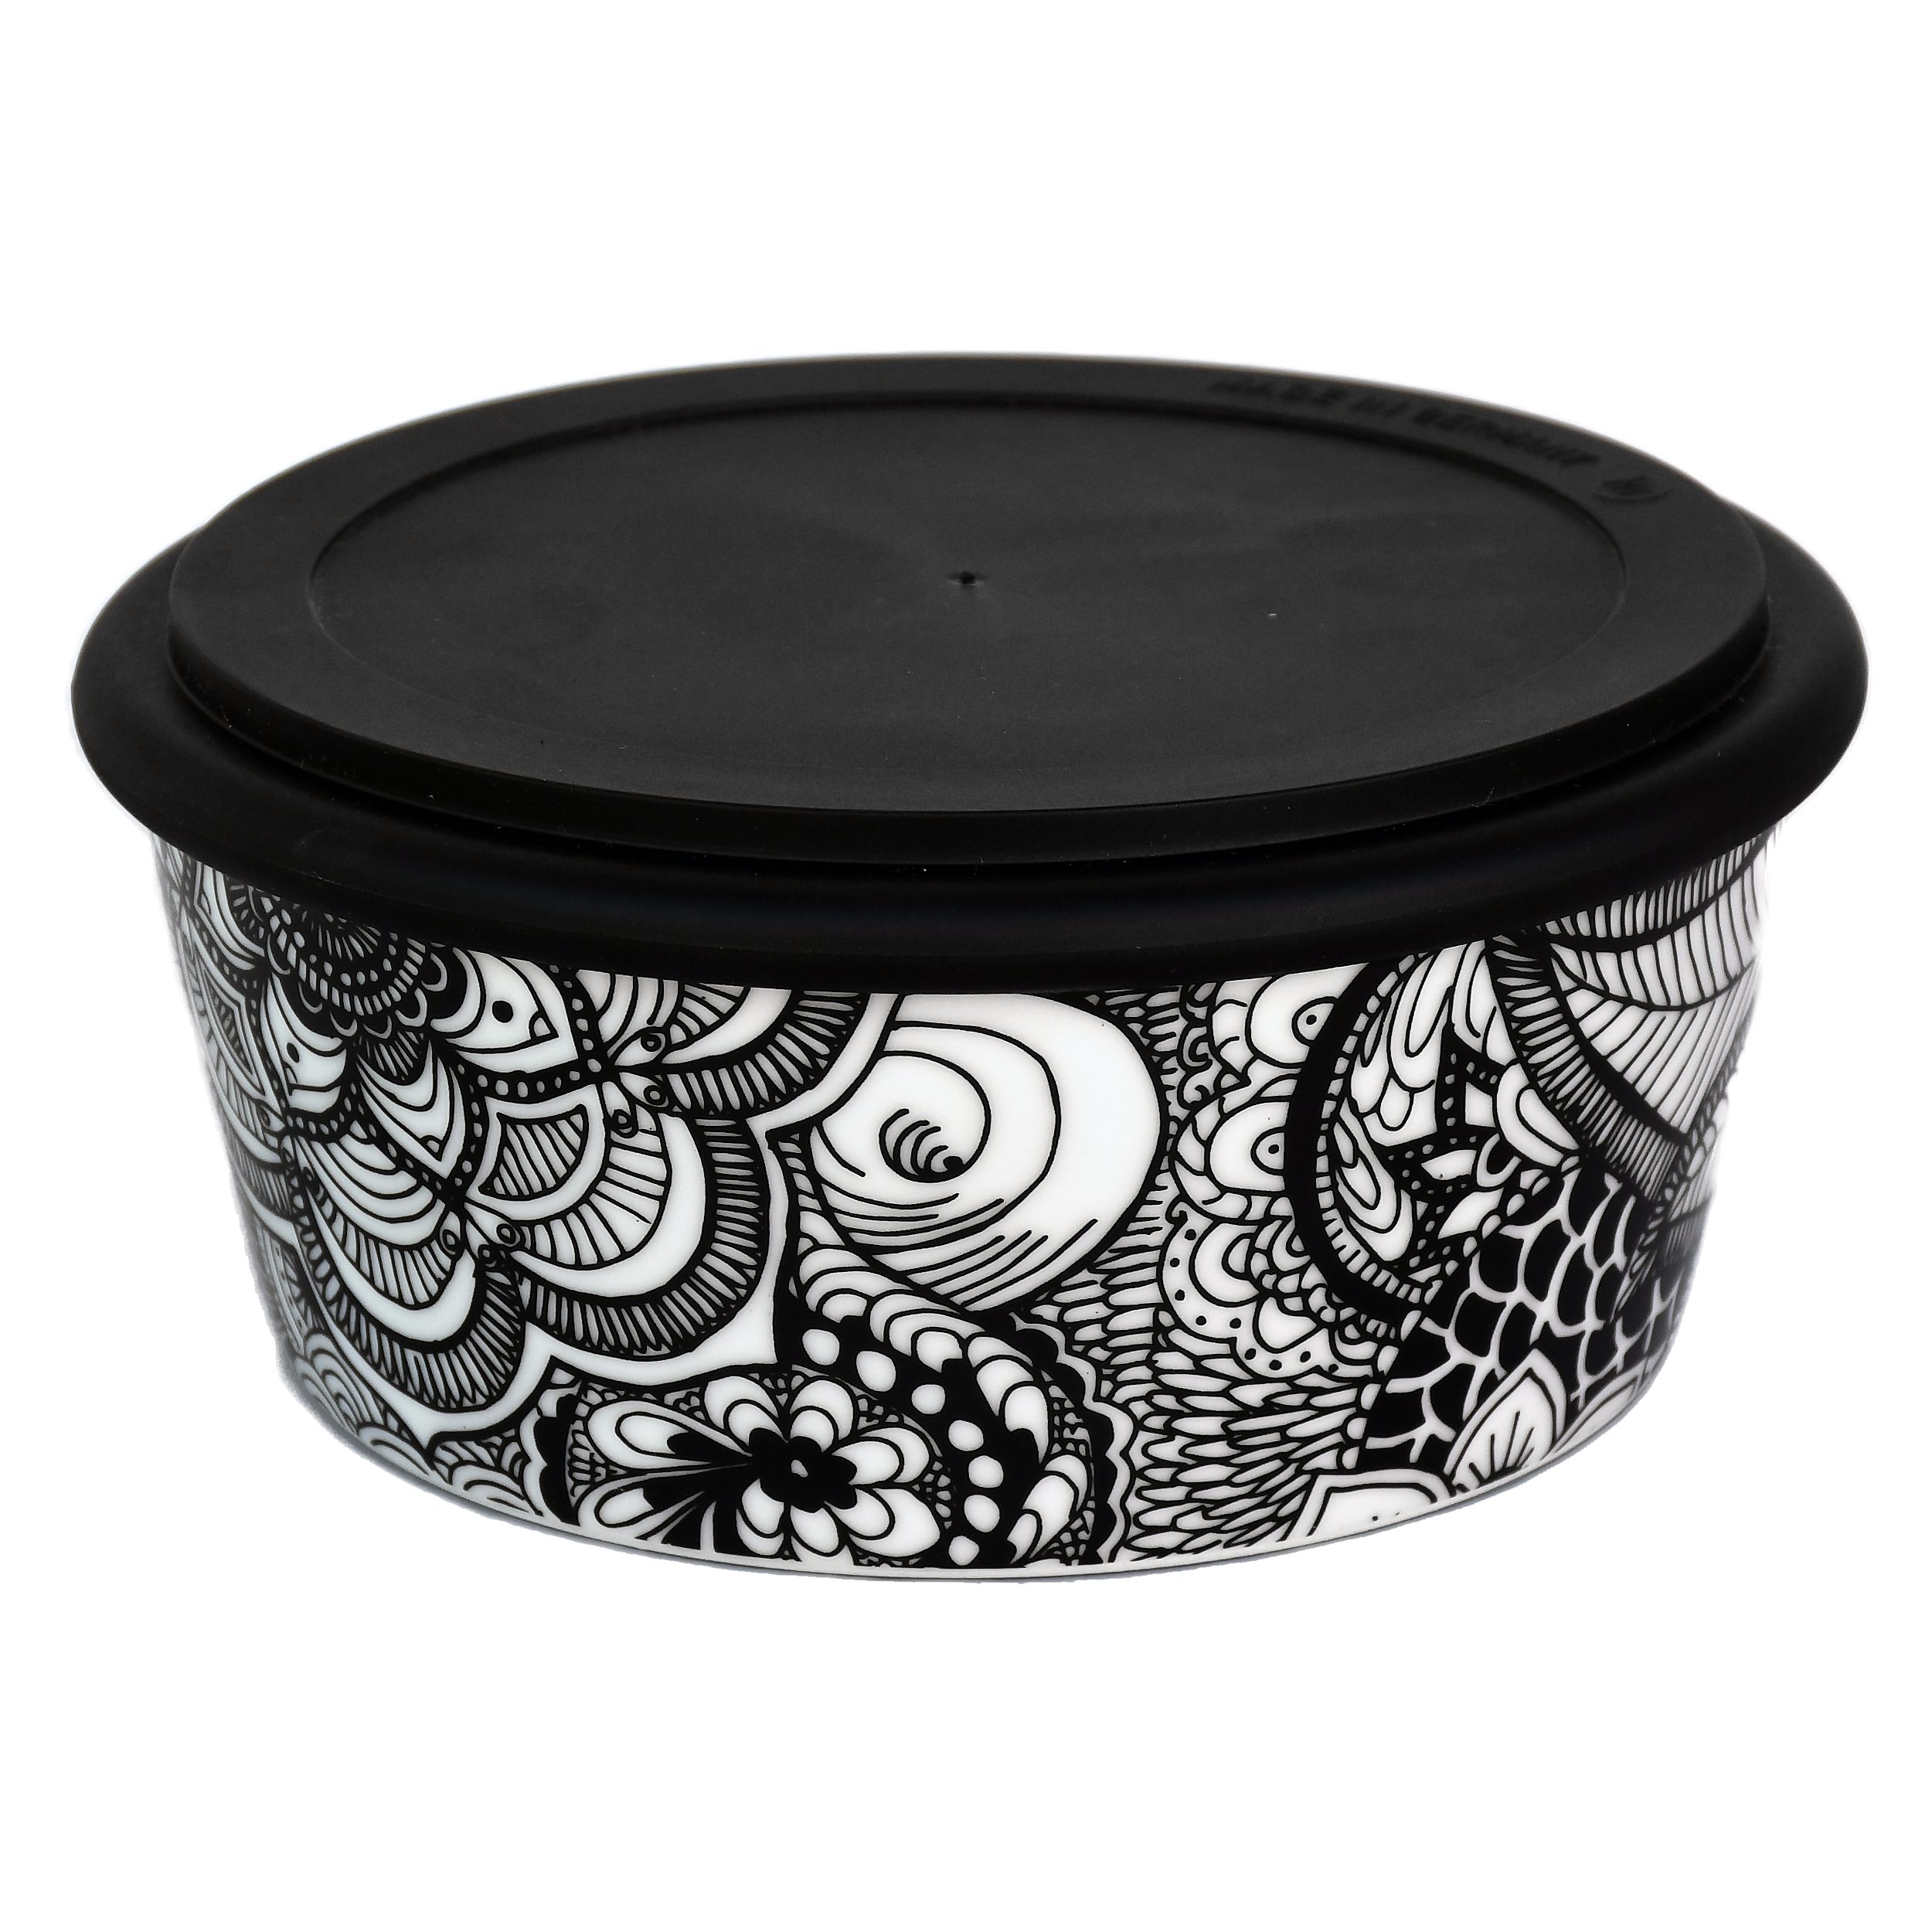 Mahlwerck Manufaktur Lunchbox Bowl2Go, Porzellan, (Lunchbox mit auslaufsicherem Deckel), spülmaschinengeeignet, mikrowellengeeignet, 100% klimaneutral Boho Black